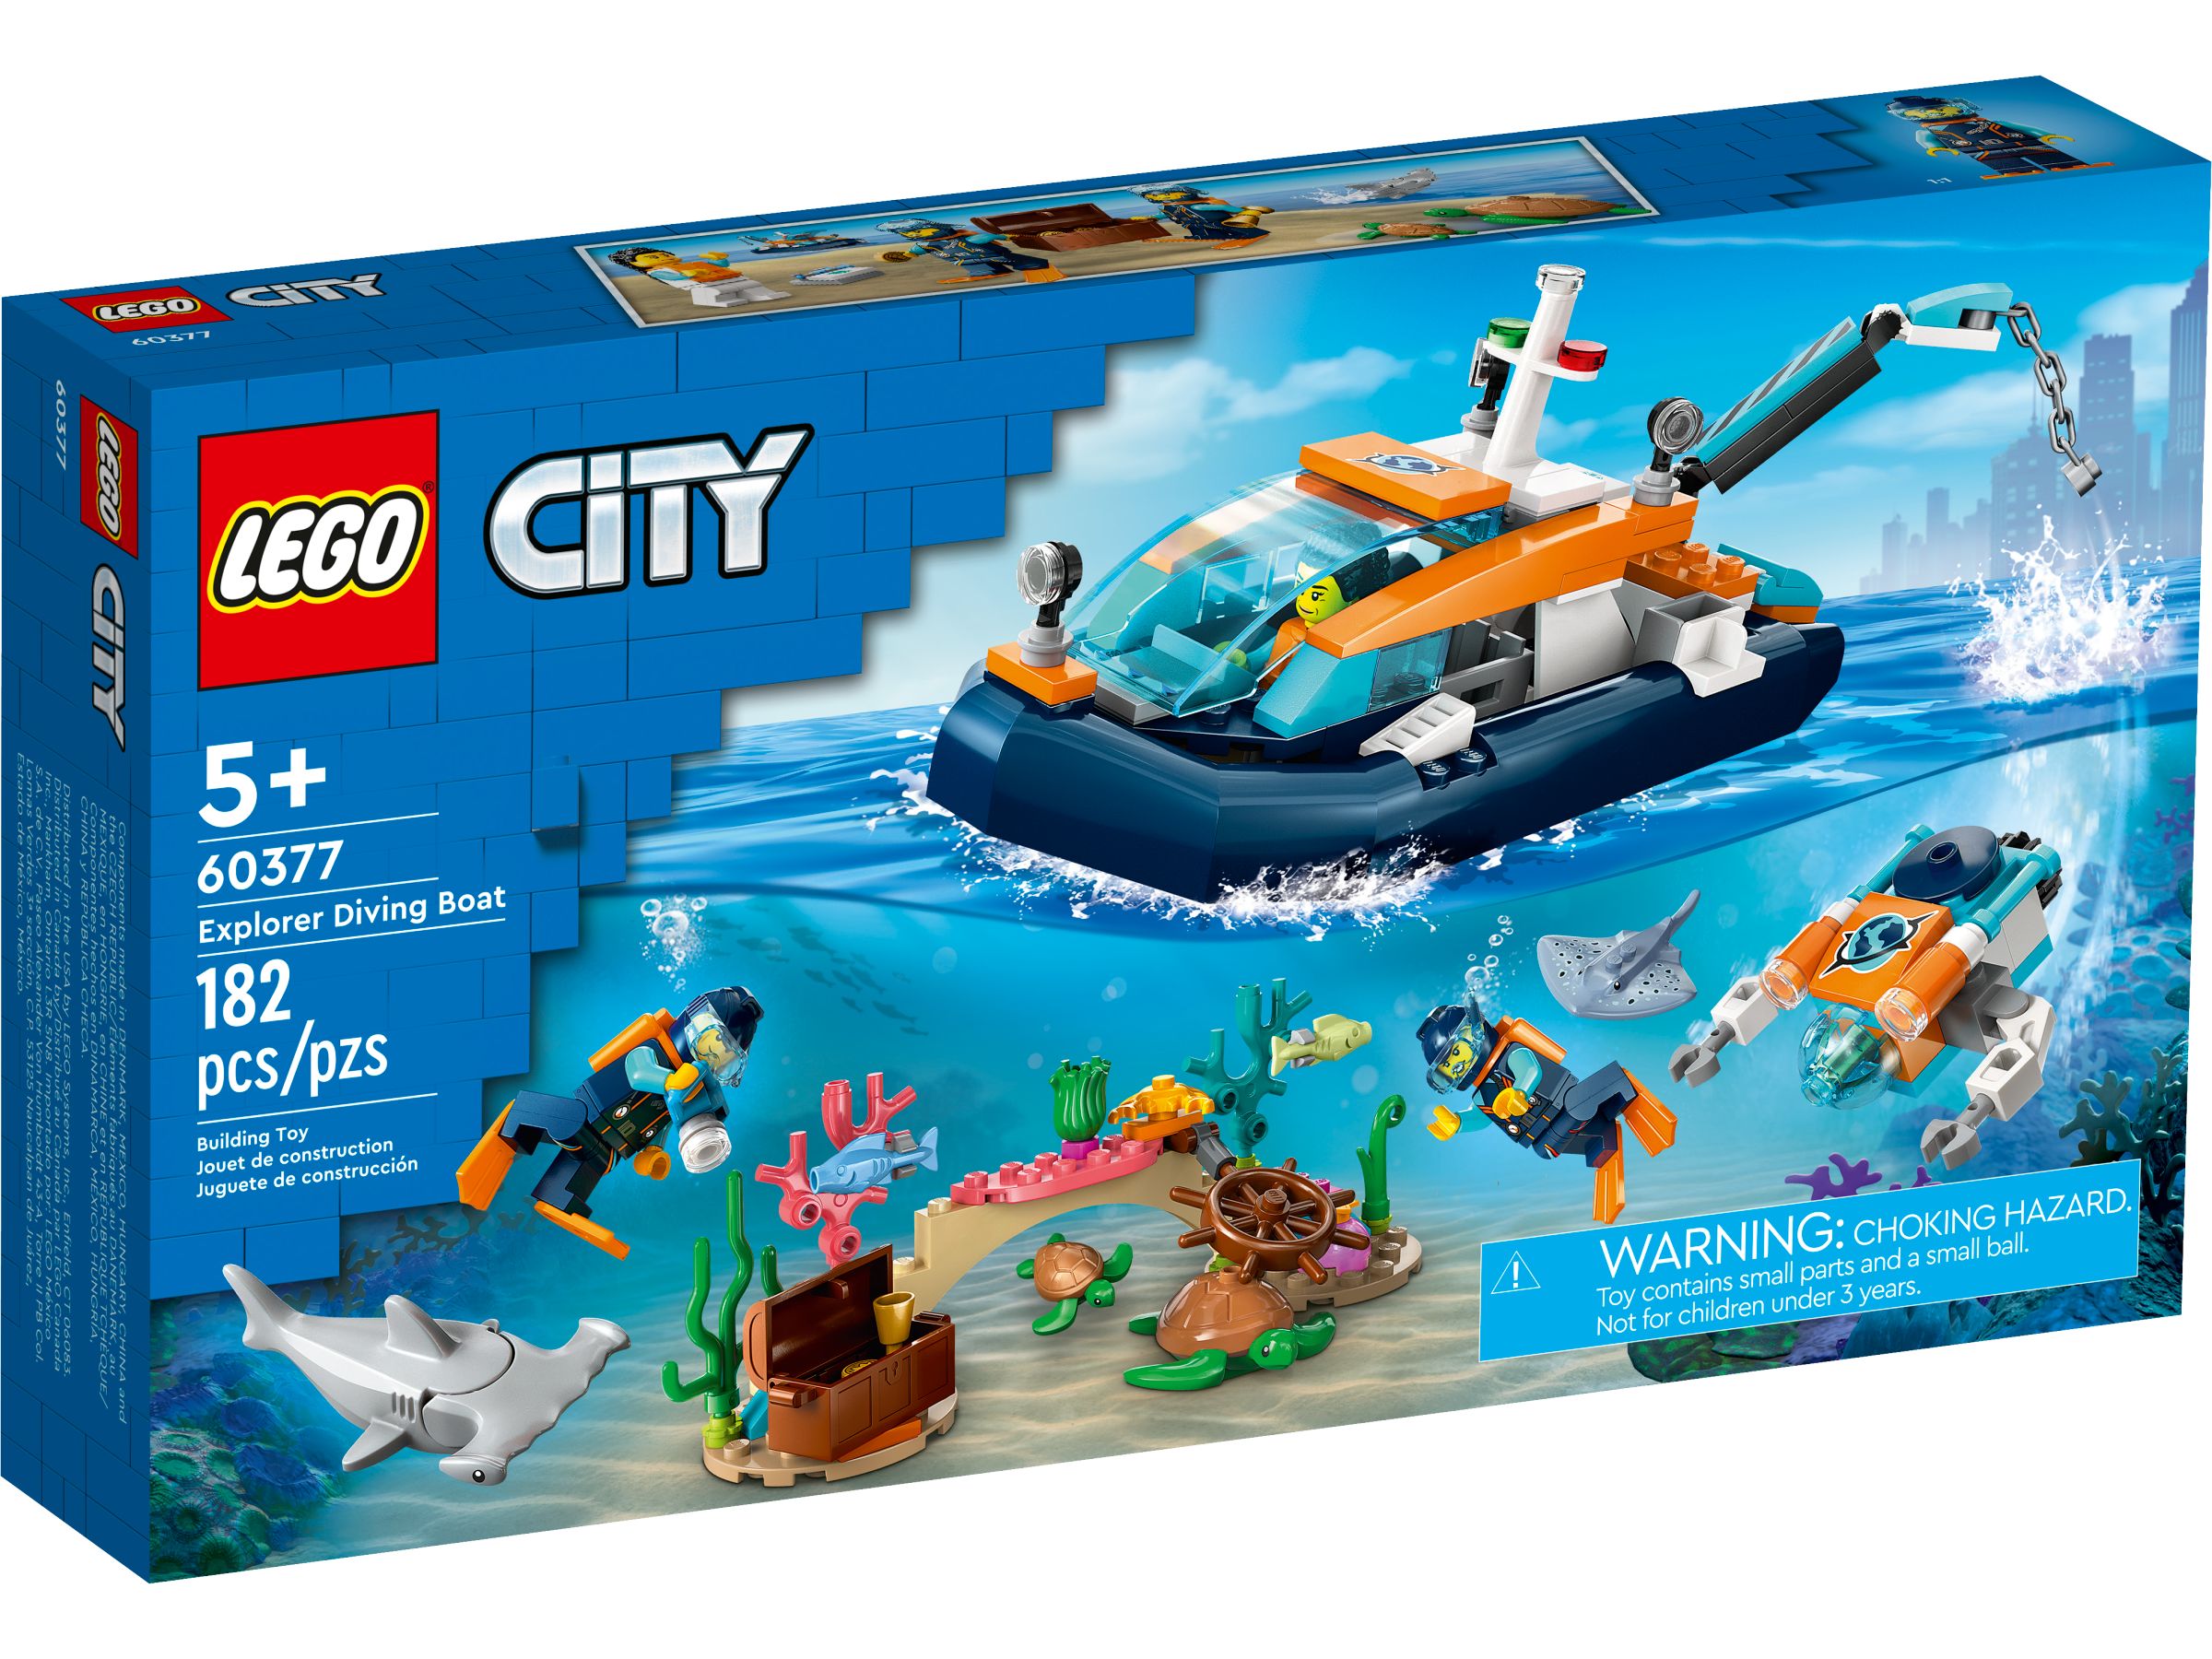 LEGO City 60377 Meeresforscher-Boot LEGO_60377_alt1.jpg